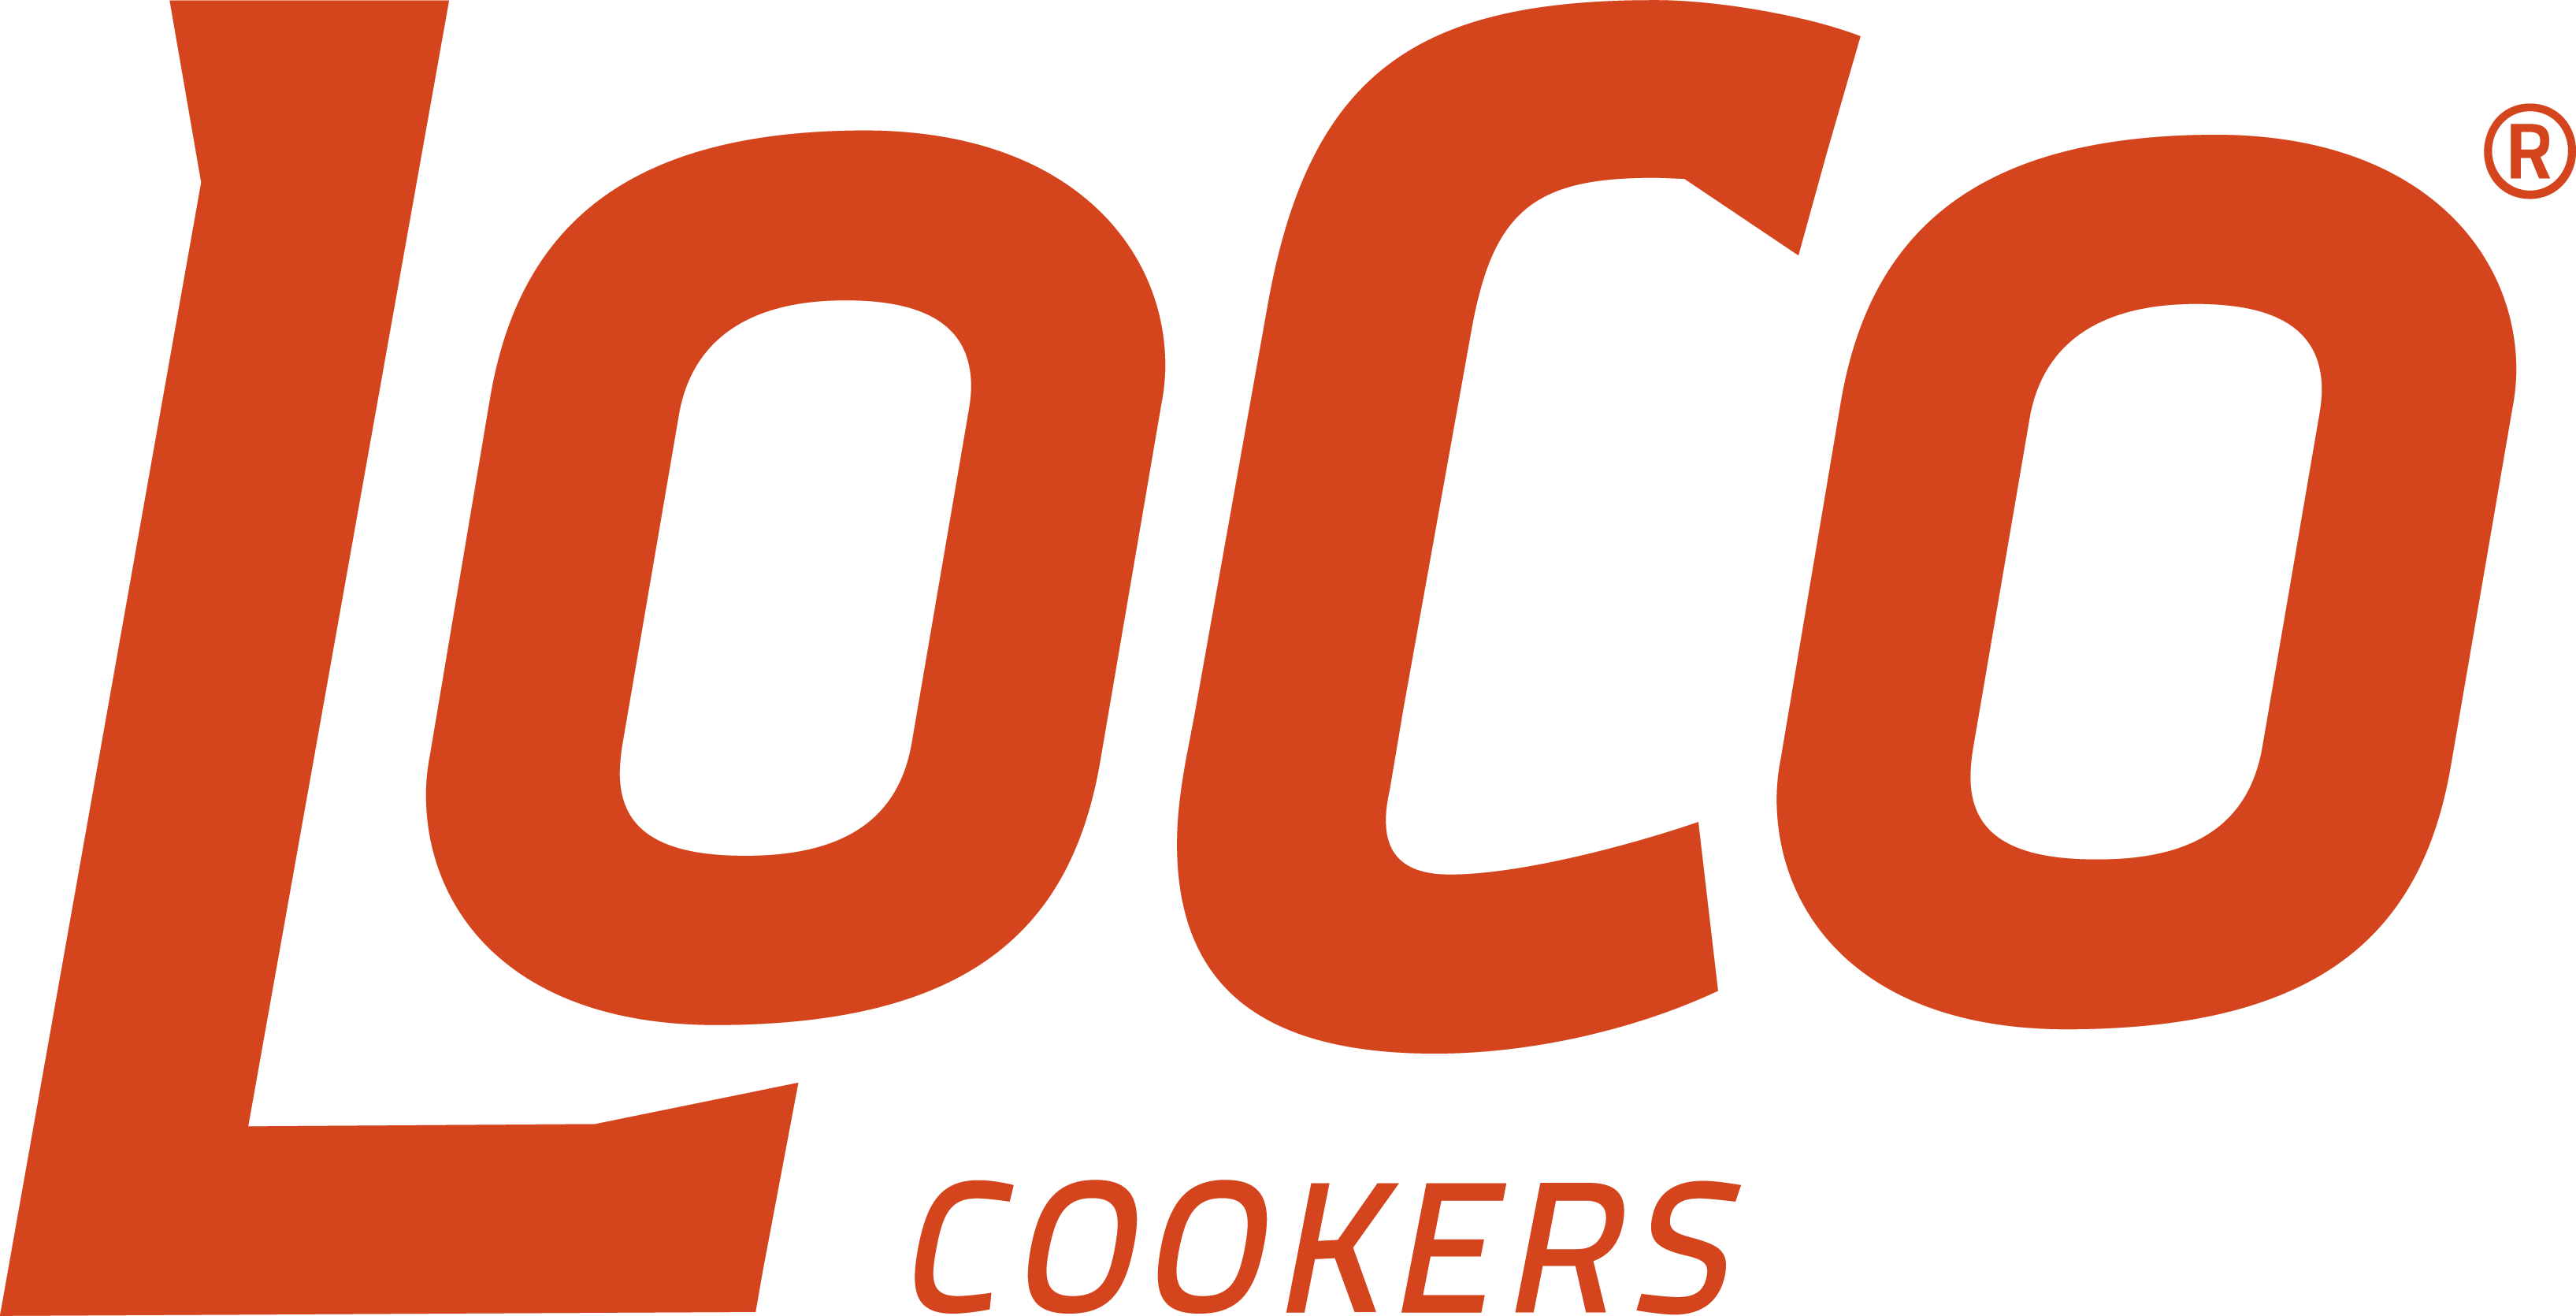 loco cooker logo